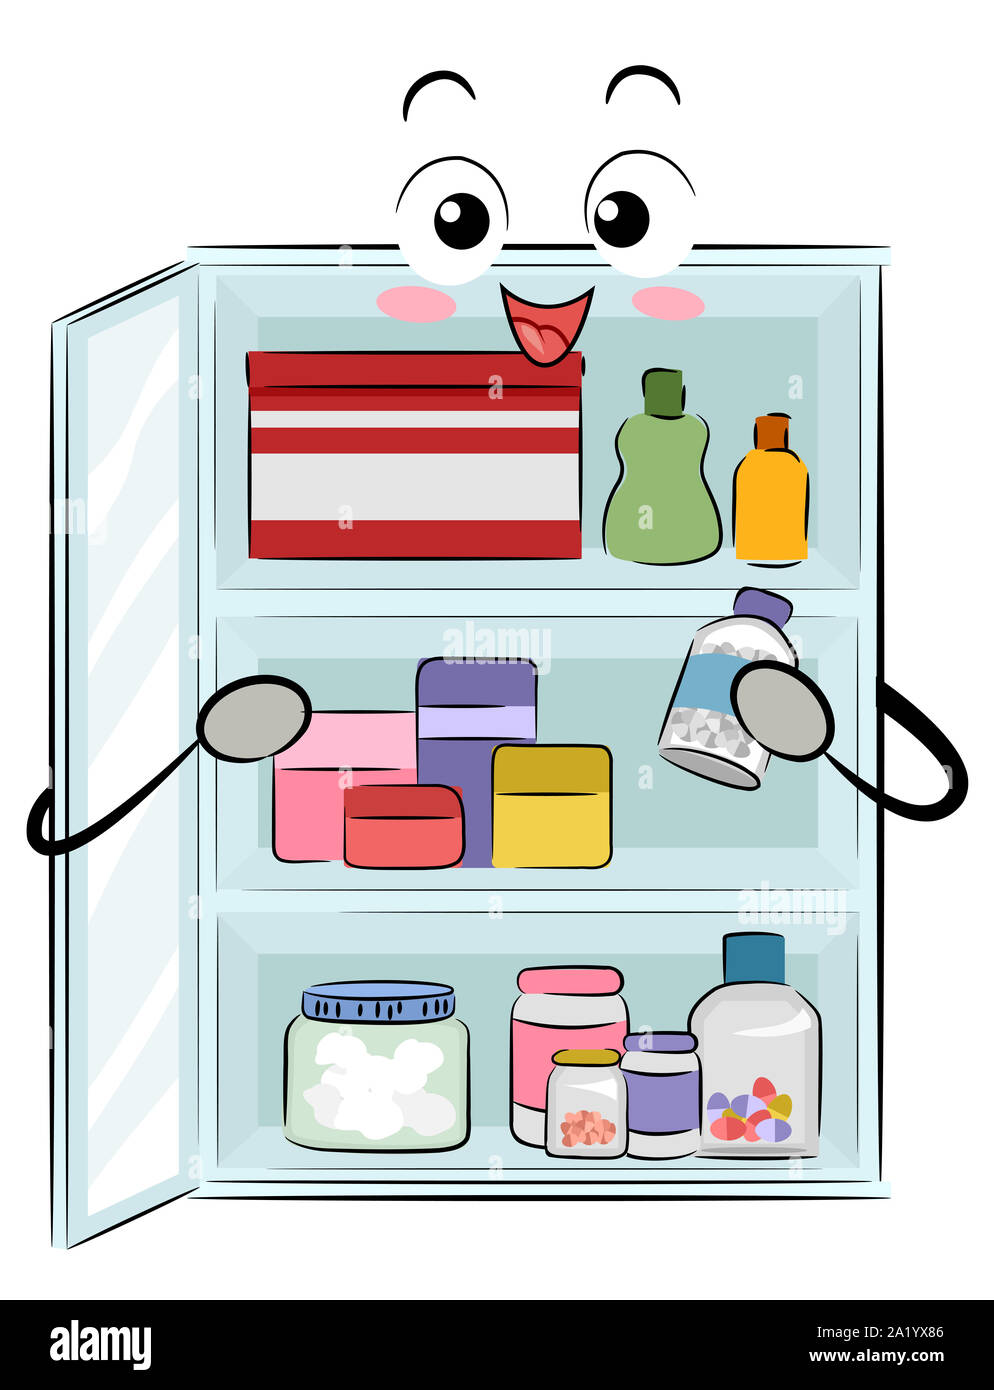 https://c8.alamy.com/comp/2A1YX86/illustration-of-a-medicine-cabinet-mascot-placing-medical-supplies-for-organization-2A1YX86.jpg